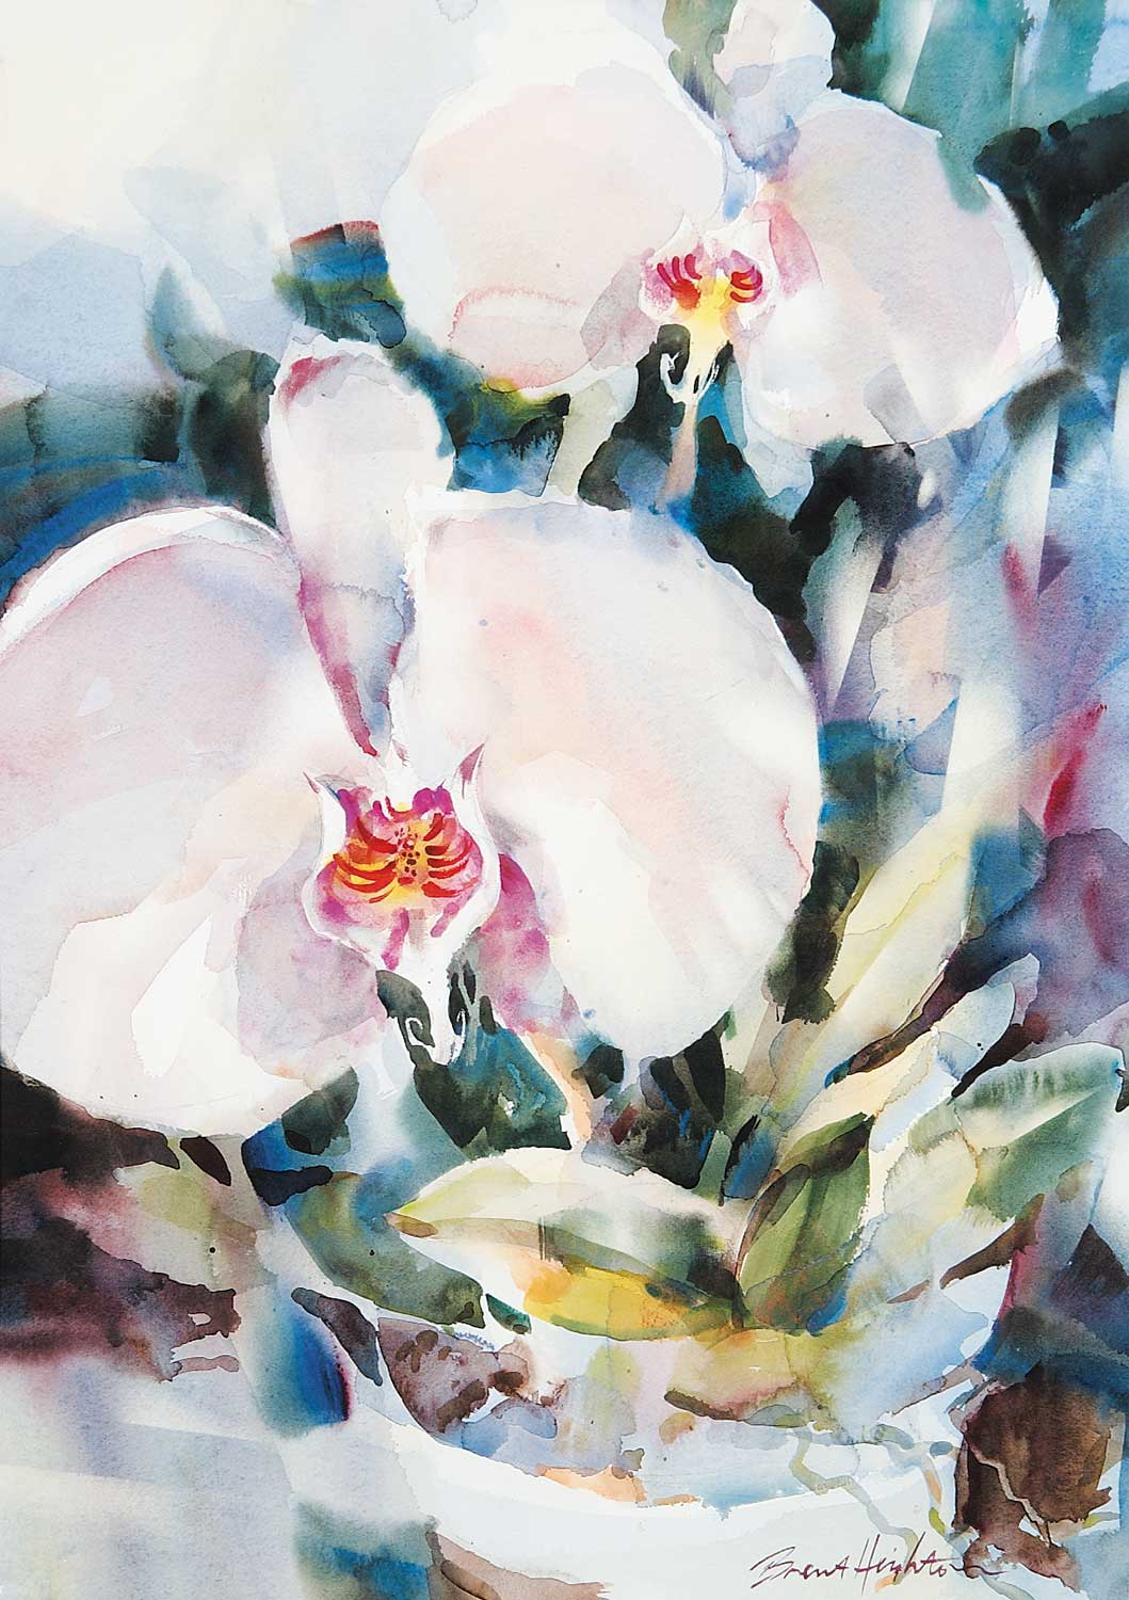 Brent Heighton (1954) - Untitled - Spring Bloom